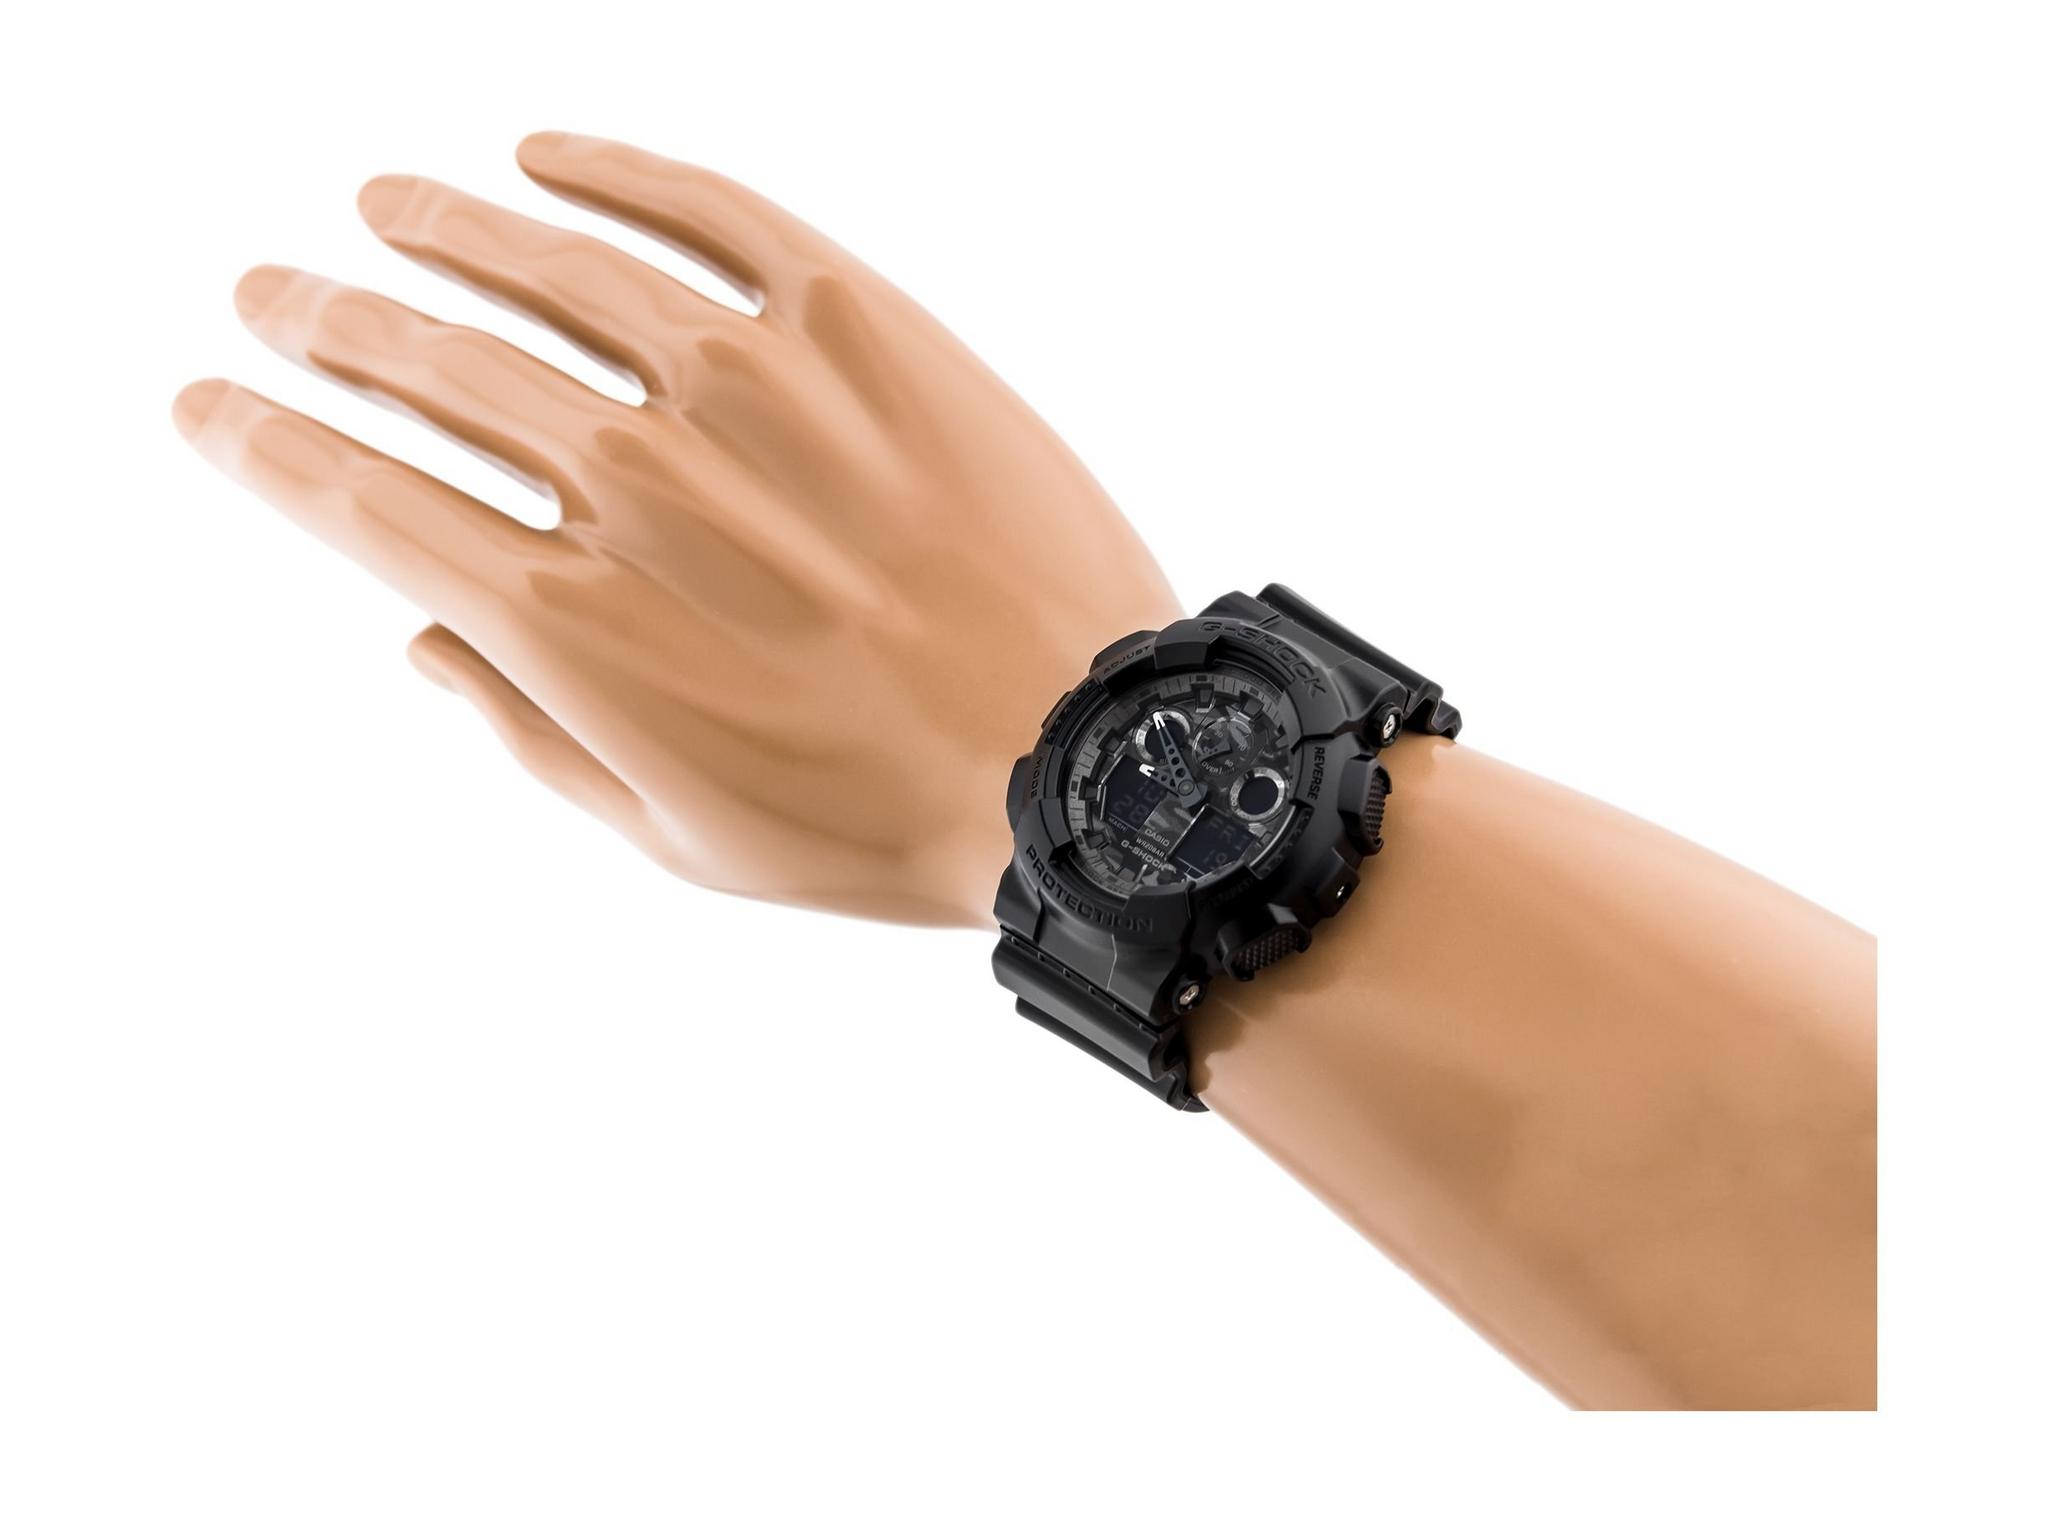 Casio G-Shock Sport Wristwatch For Men (GA-100CF-1ADR)